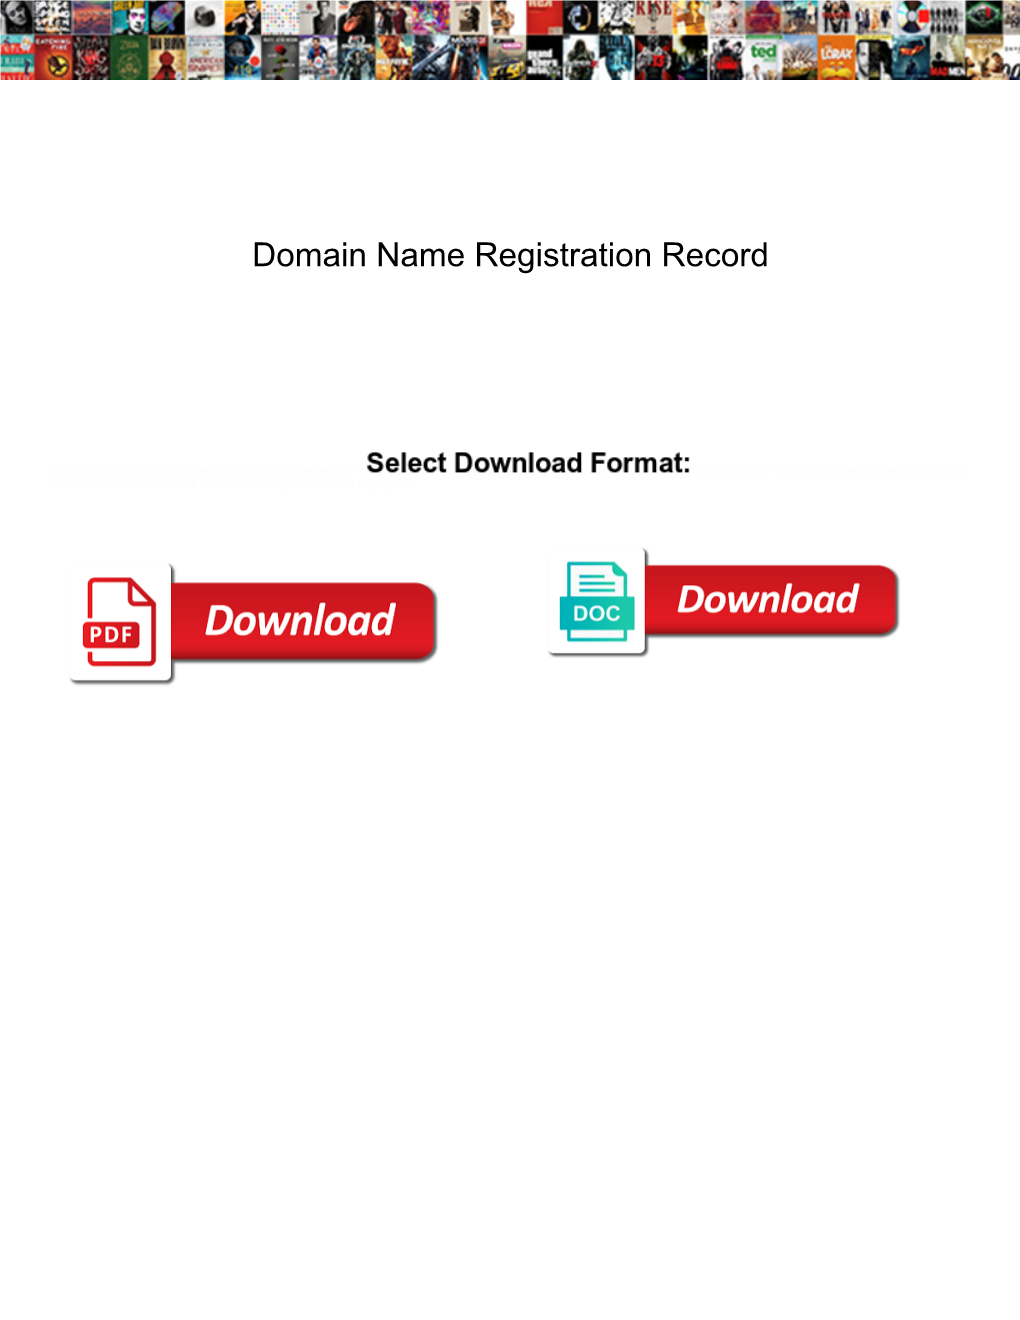 Domain Name Registration Record